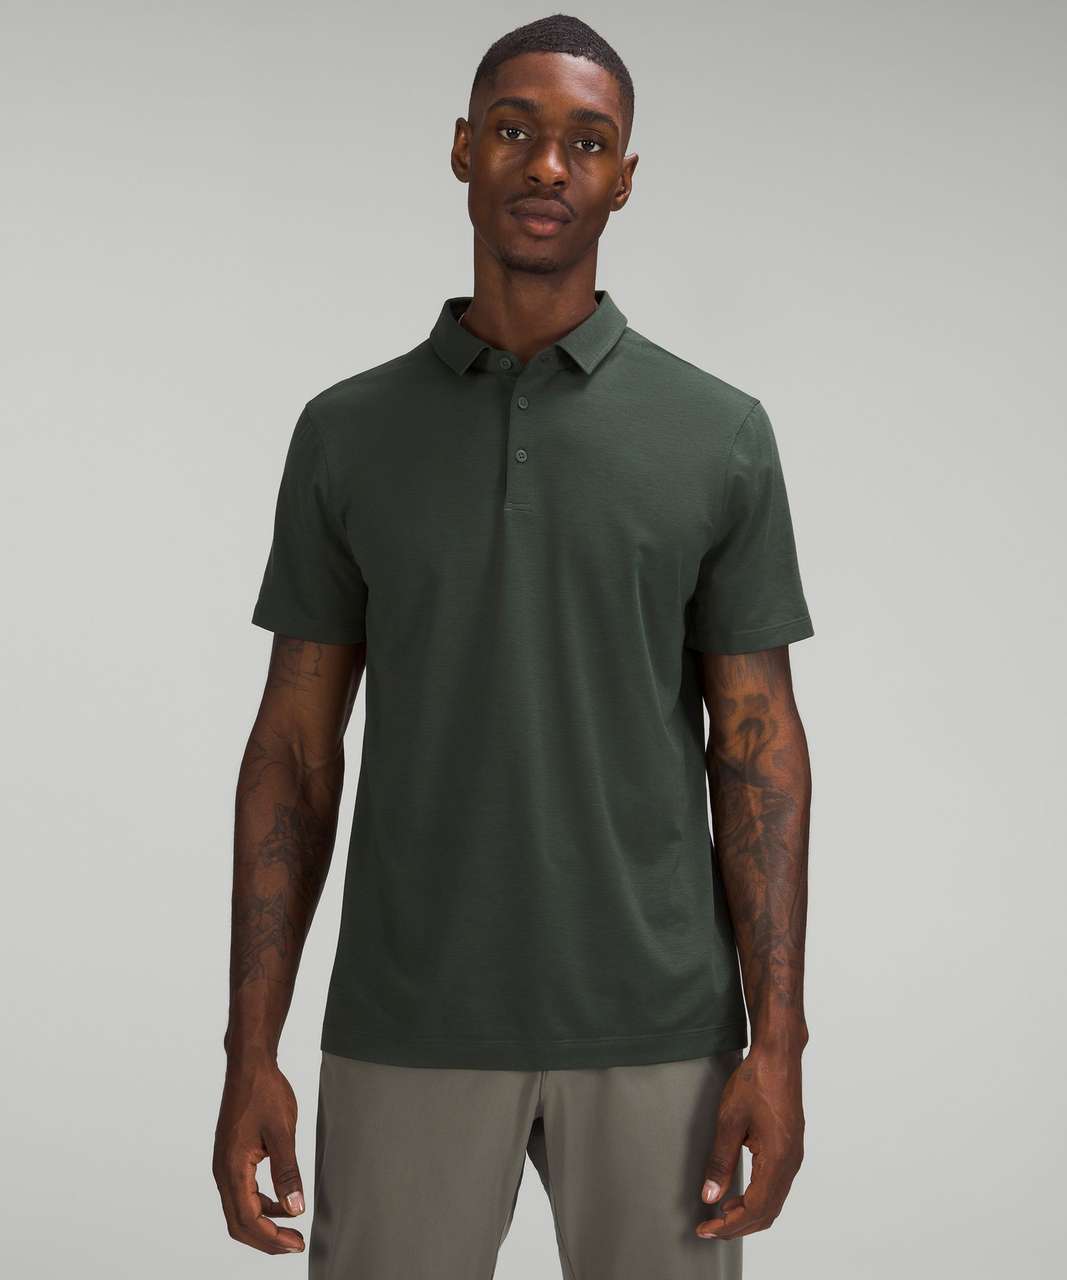 Lululemon Evolution Short Sleeve Polo Shirt - Smoked Spruce